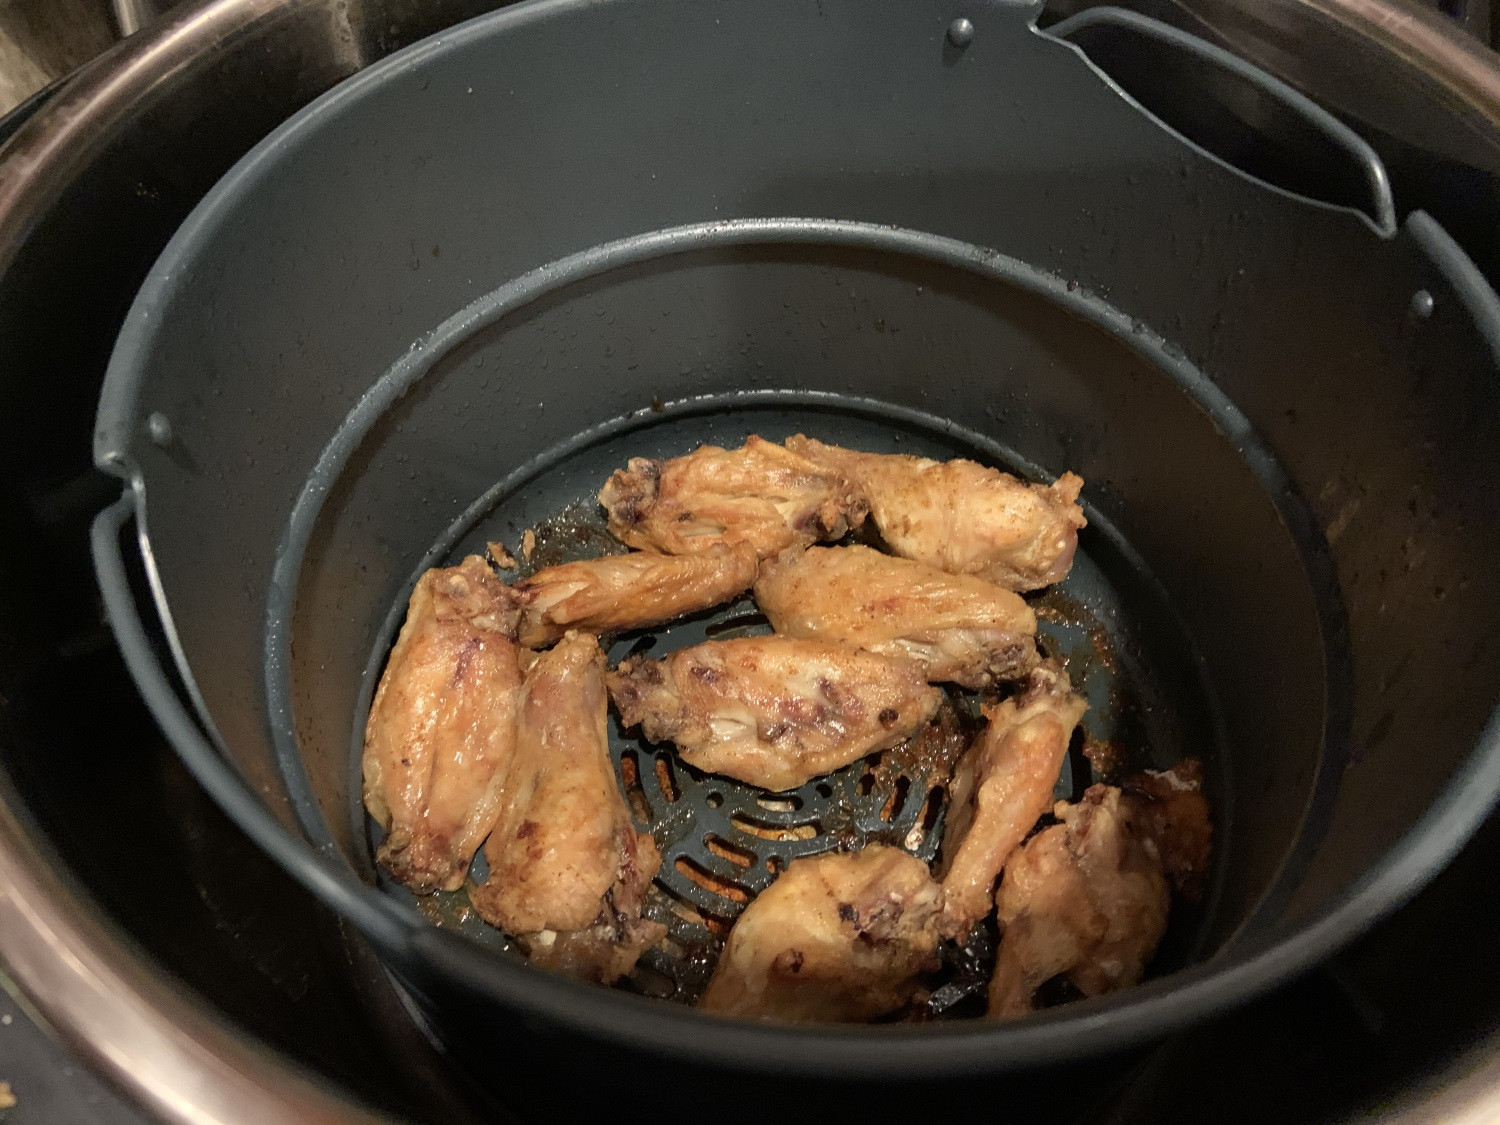 Instant Pot Crispy Chicken Wings
 Instant Pot Duo Crisp Chicken Wings Instant Pot Cooking